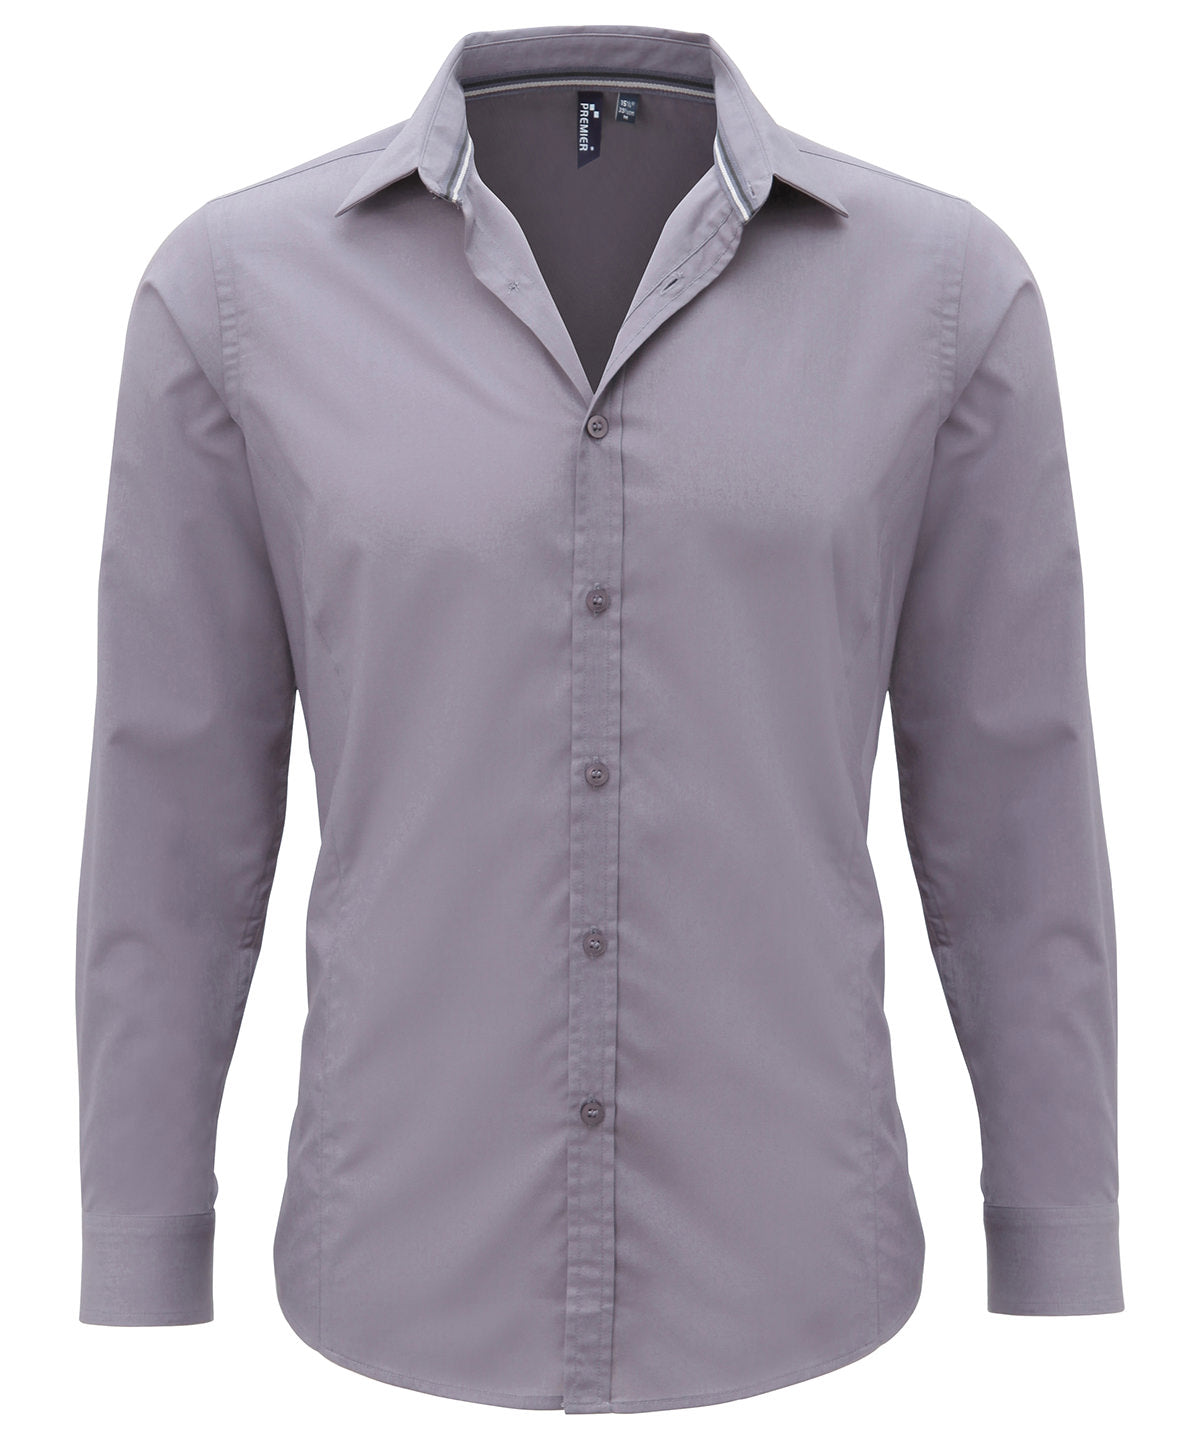 Bolir - Long Sleeve Fitted "Friday Bar Shirt"